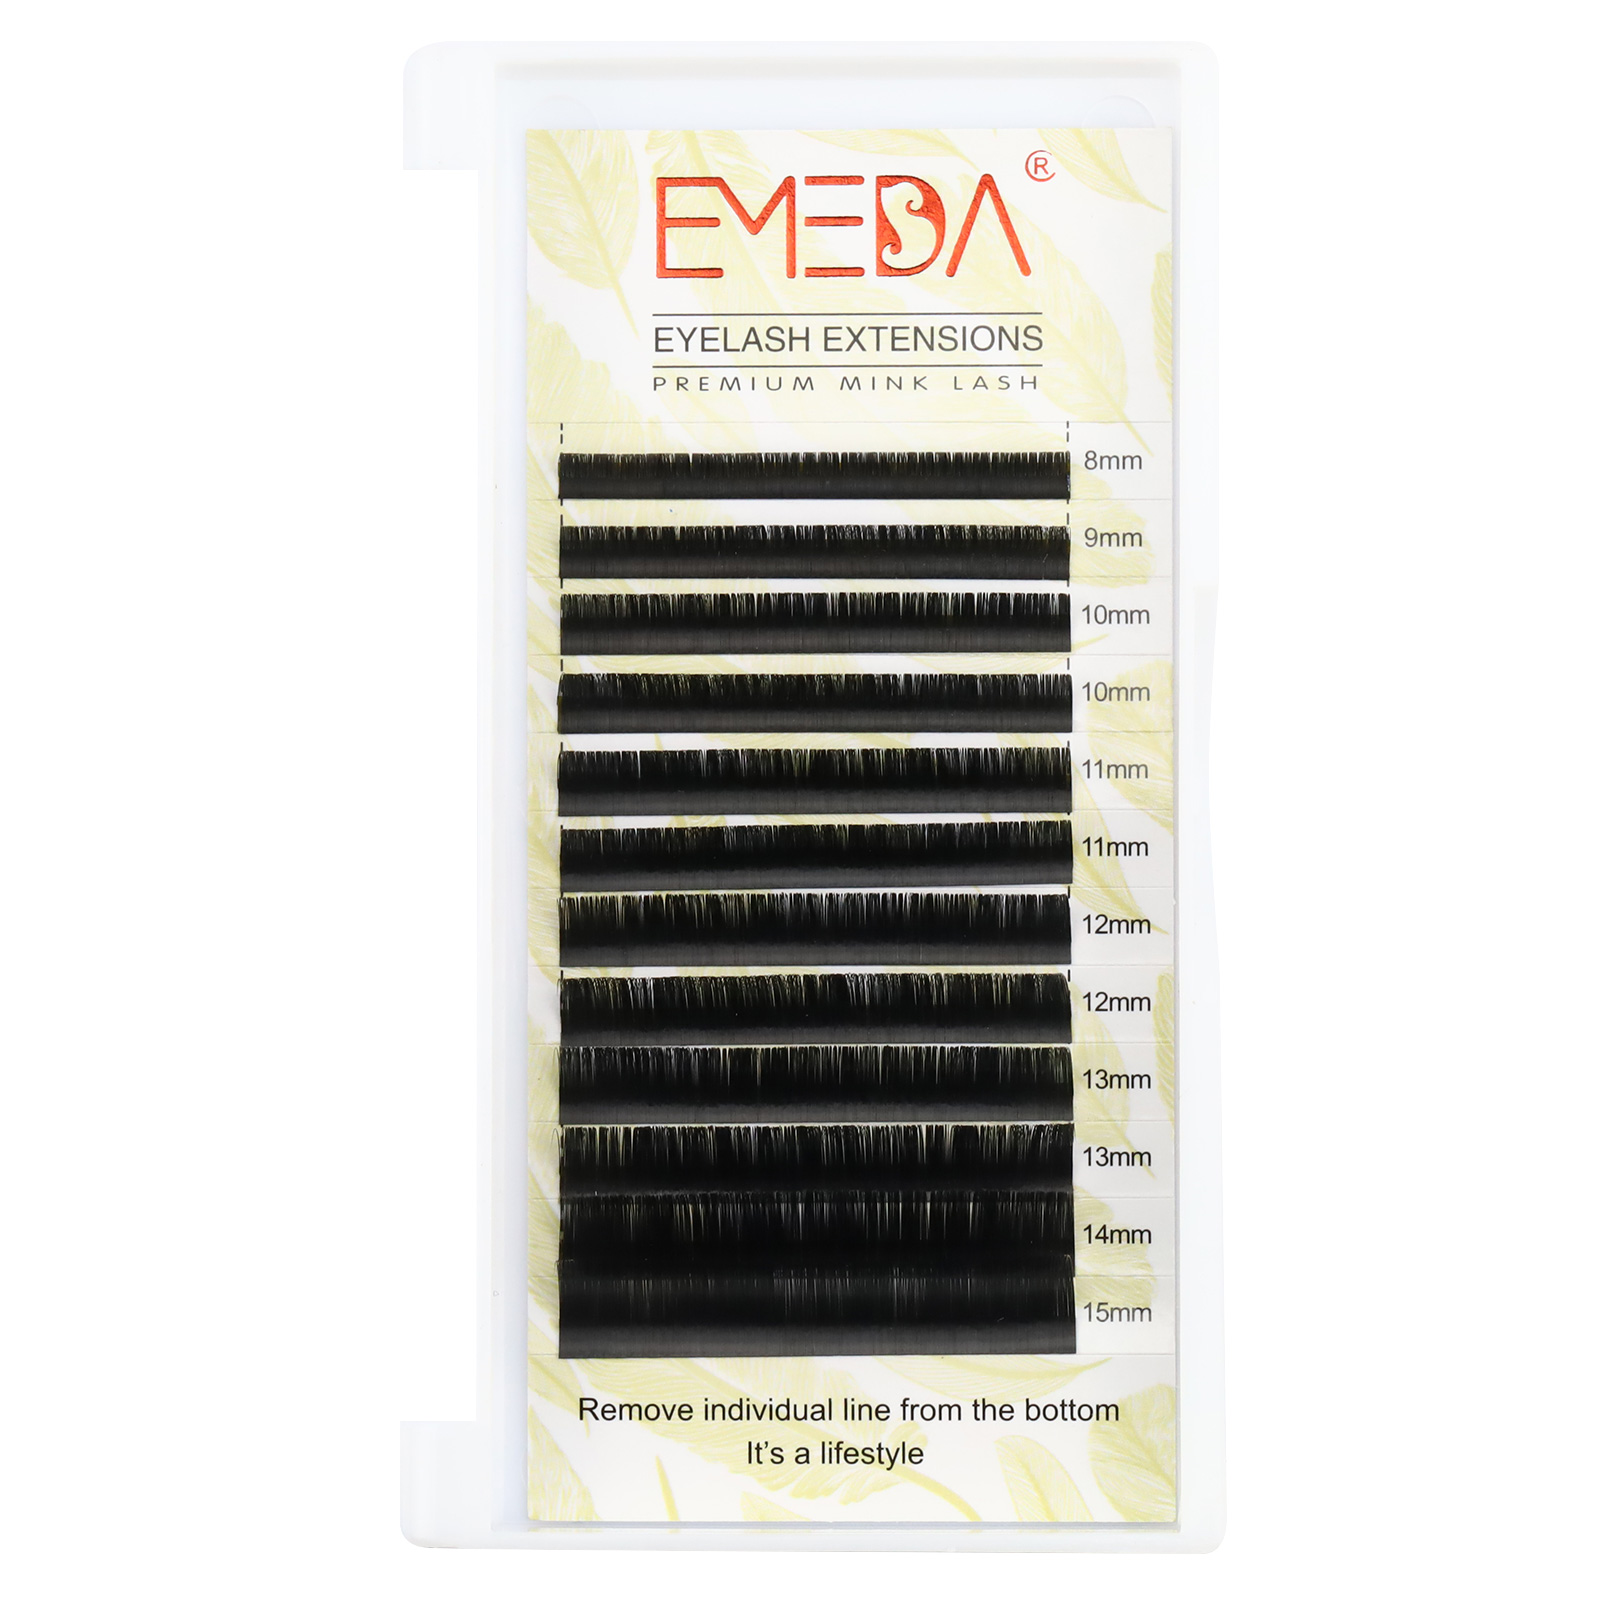 The styles of applying eyelash extensions 